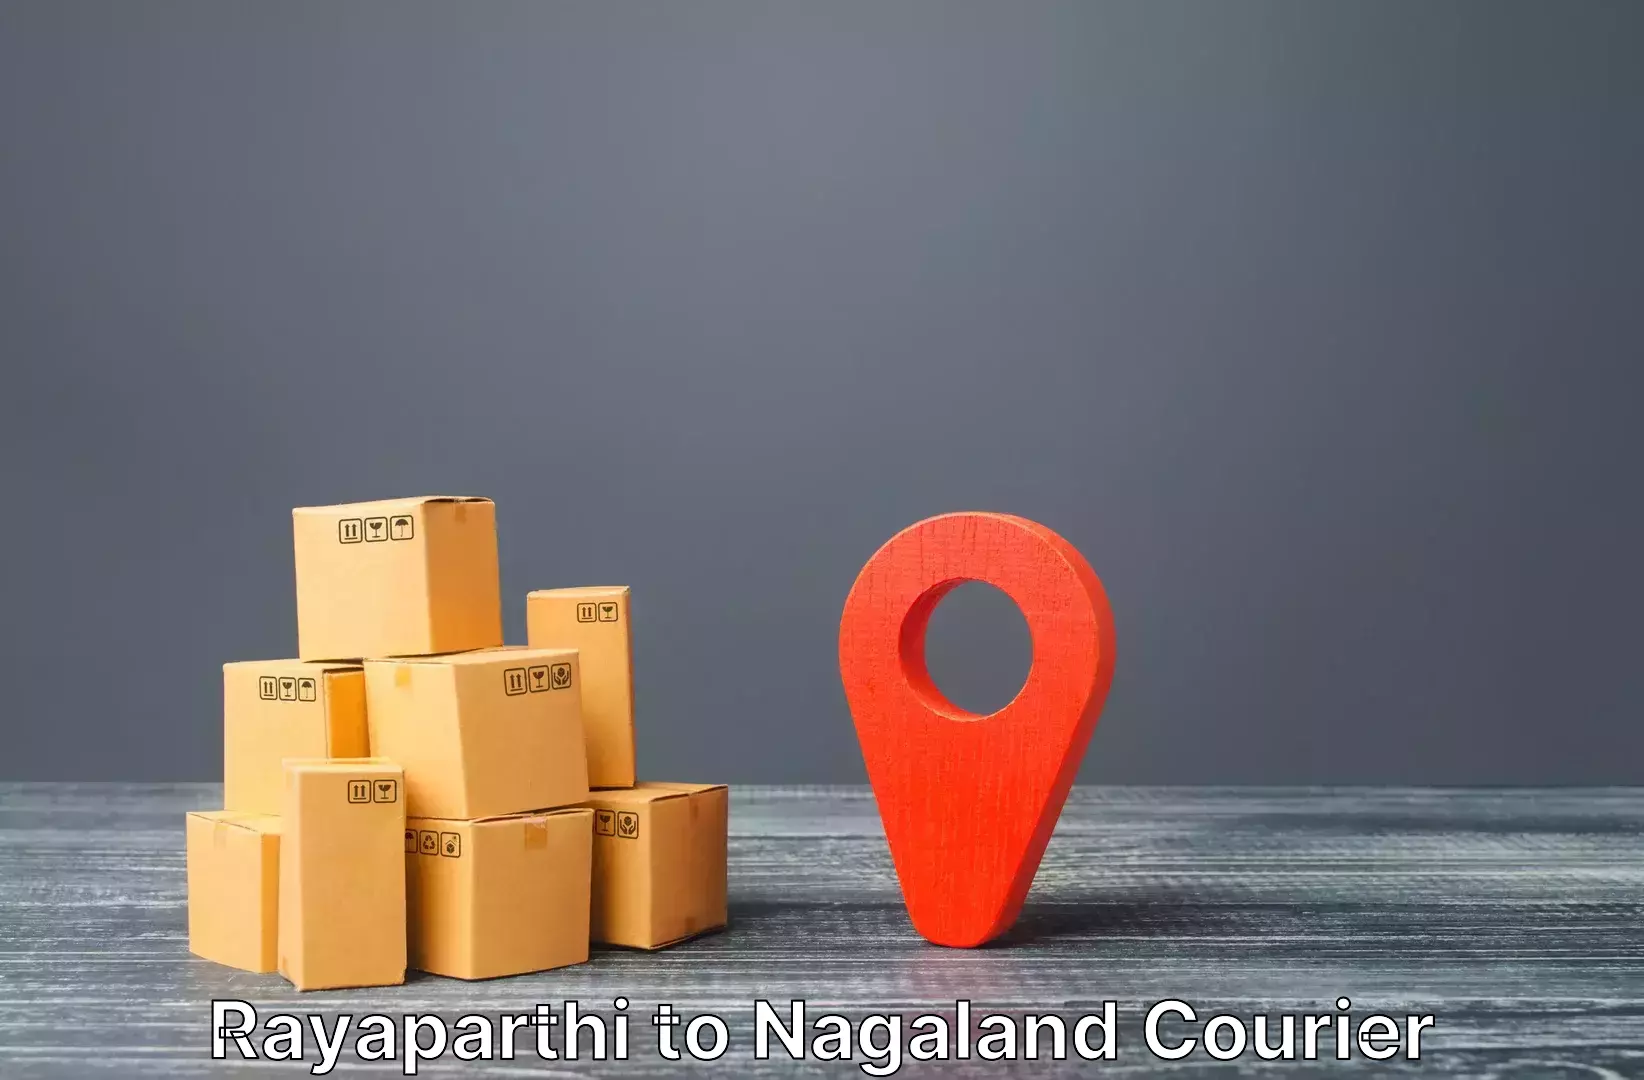 Baggage transport network Rayaparthi to Nagaland